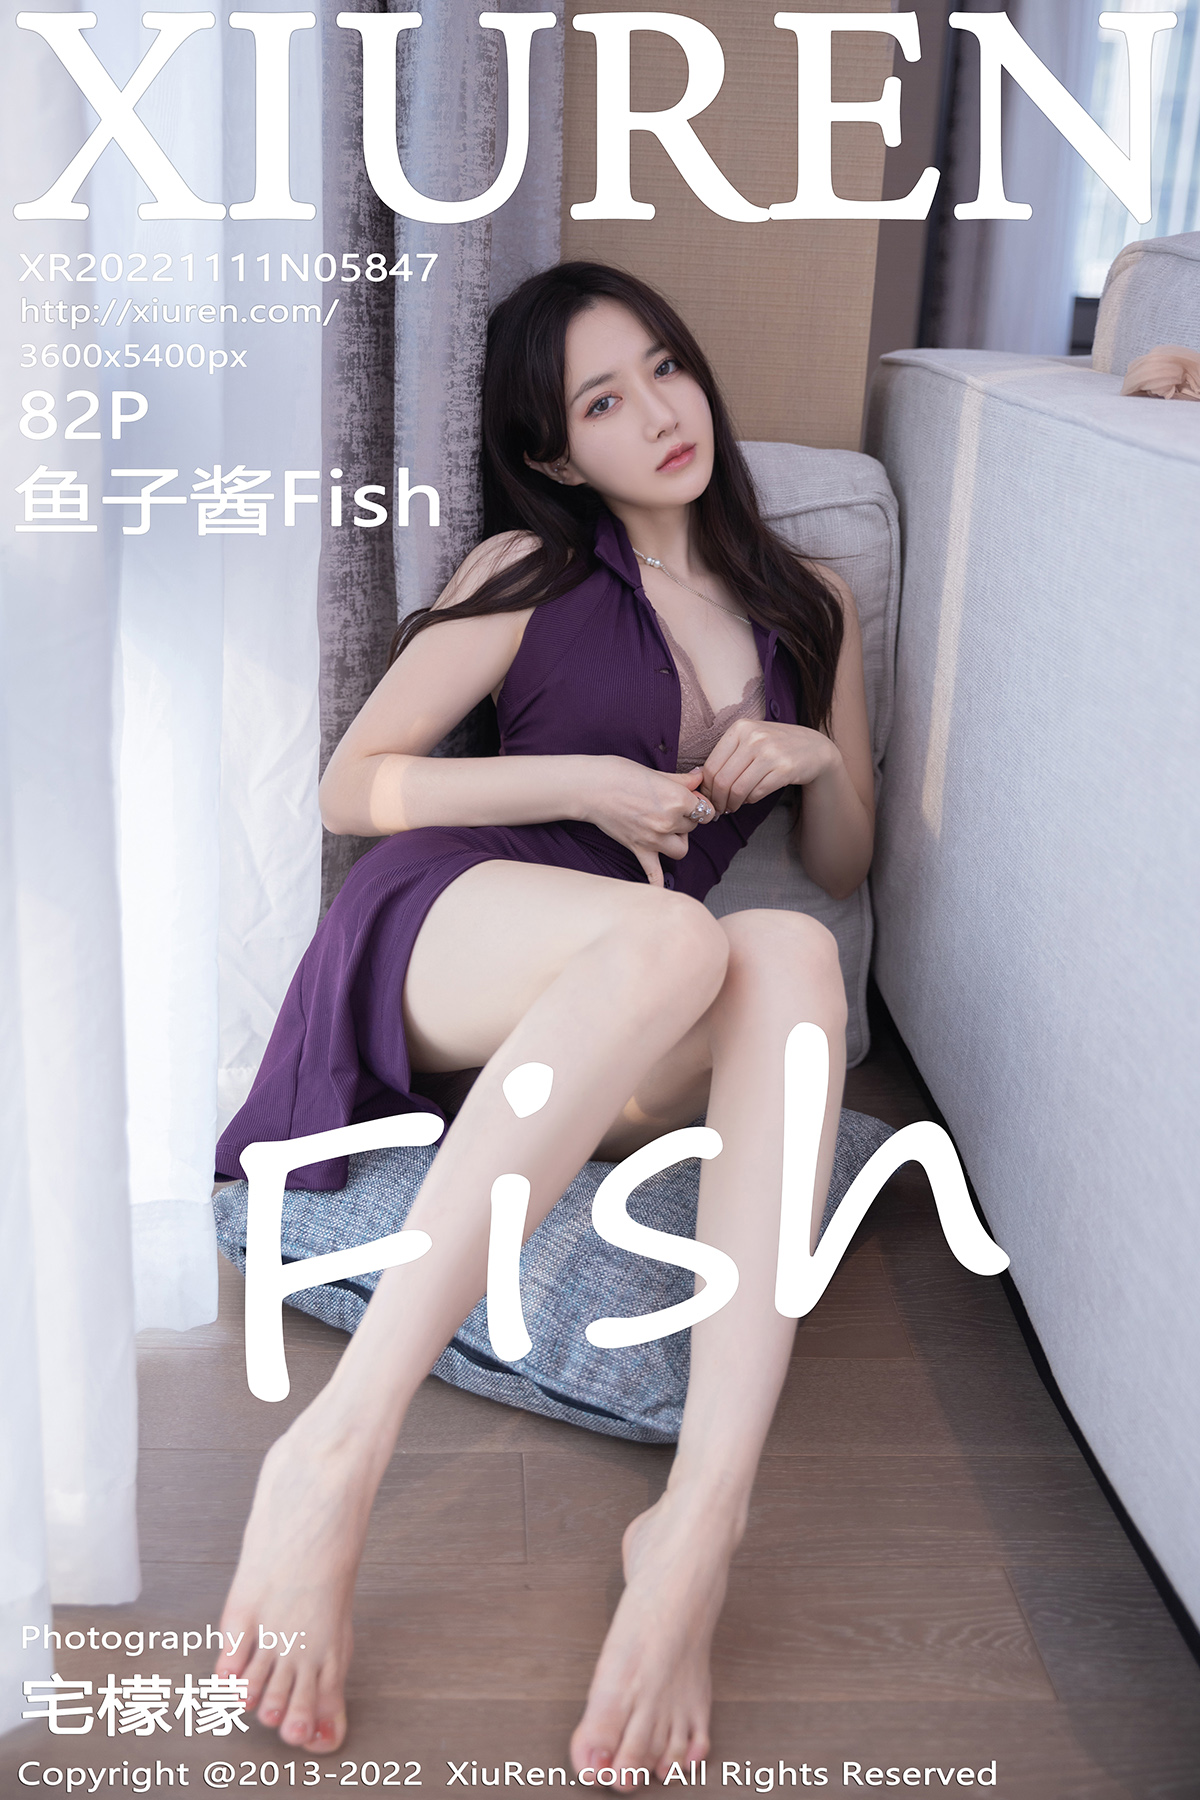 【XiuRen秀人網】2022.11.11 Vol.5847 魚子醬Fish 完整版無水印寫真【82P】 - 貼圖 - 絲襪美腿 -